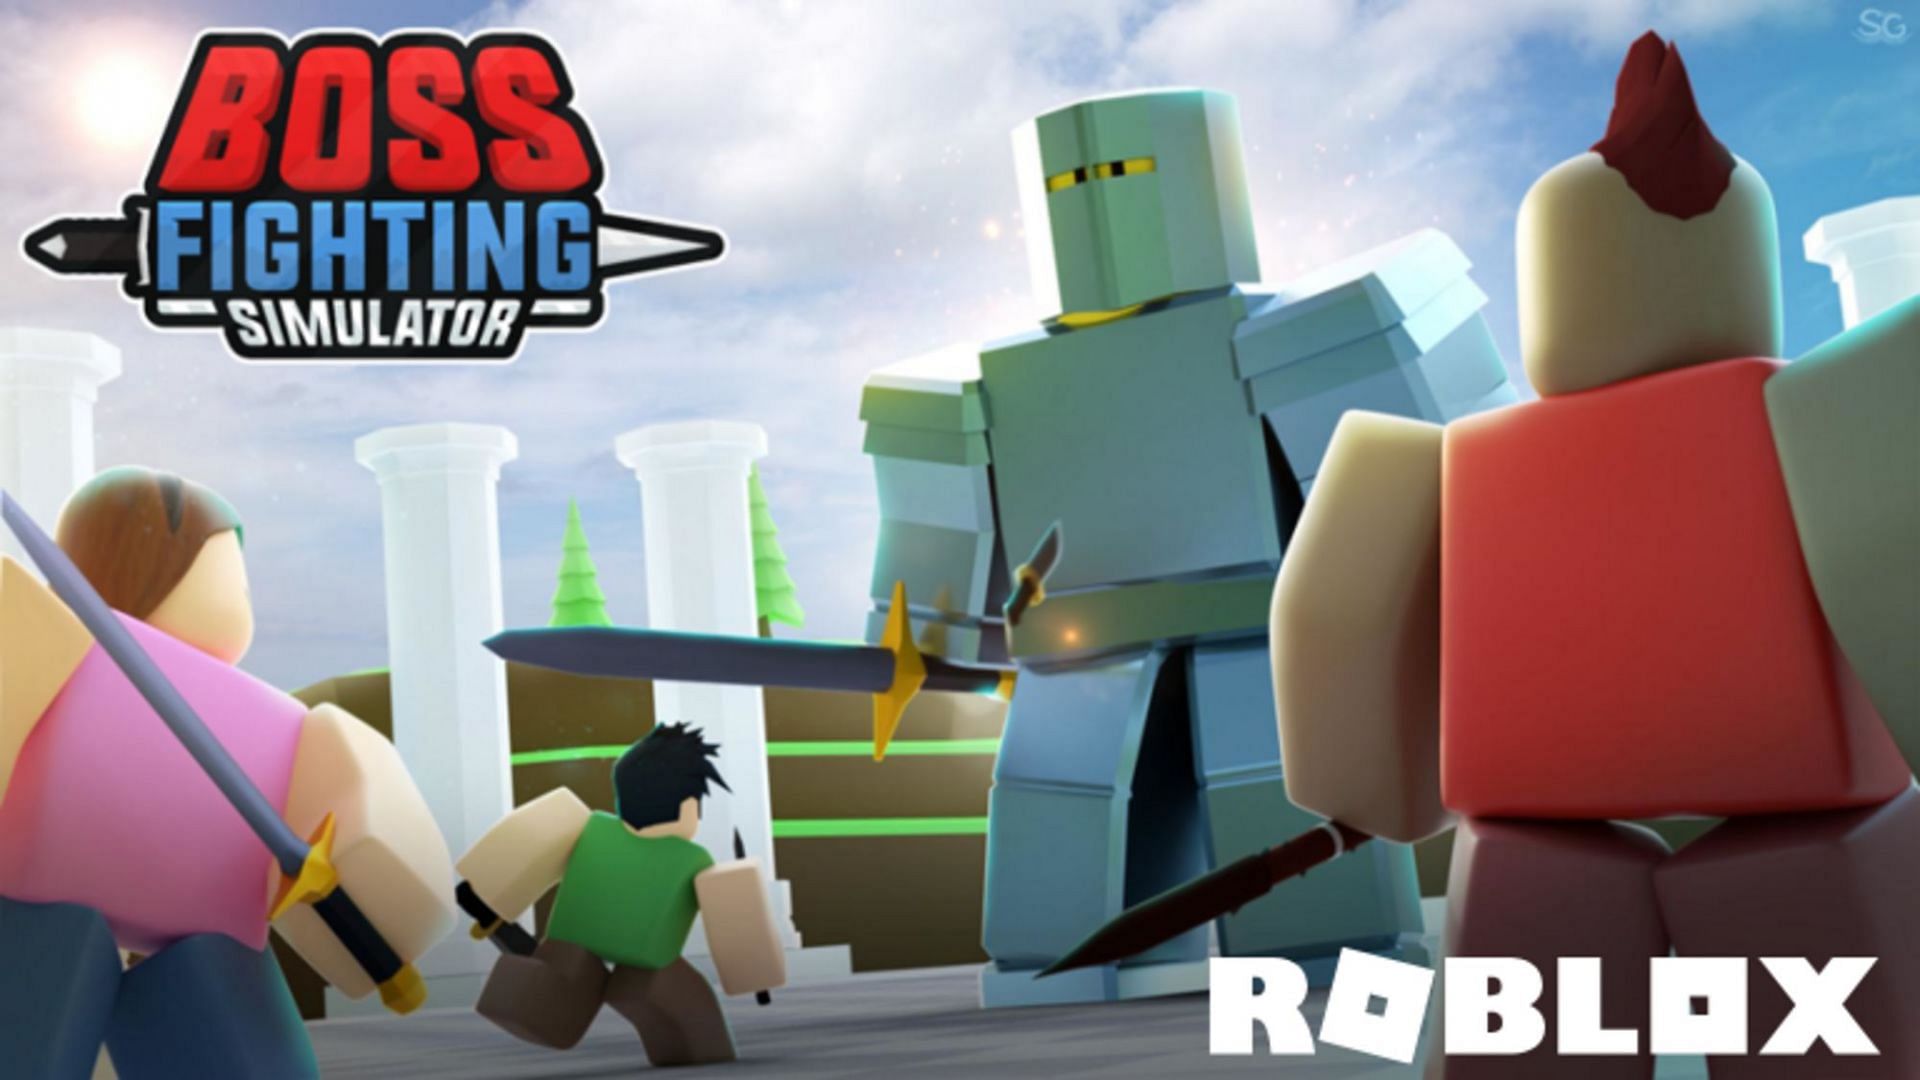 Roblox Boss Fighting Simulator codes to redeem free rewards (Image via Roblox)